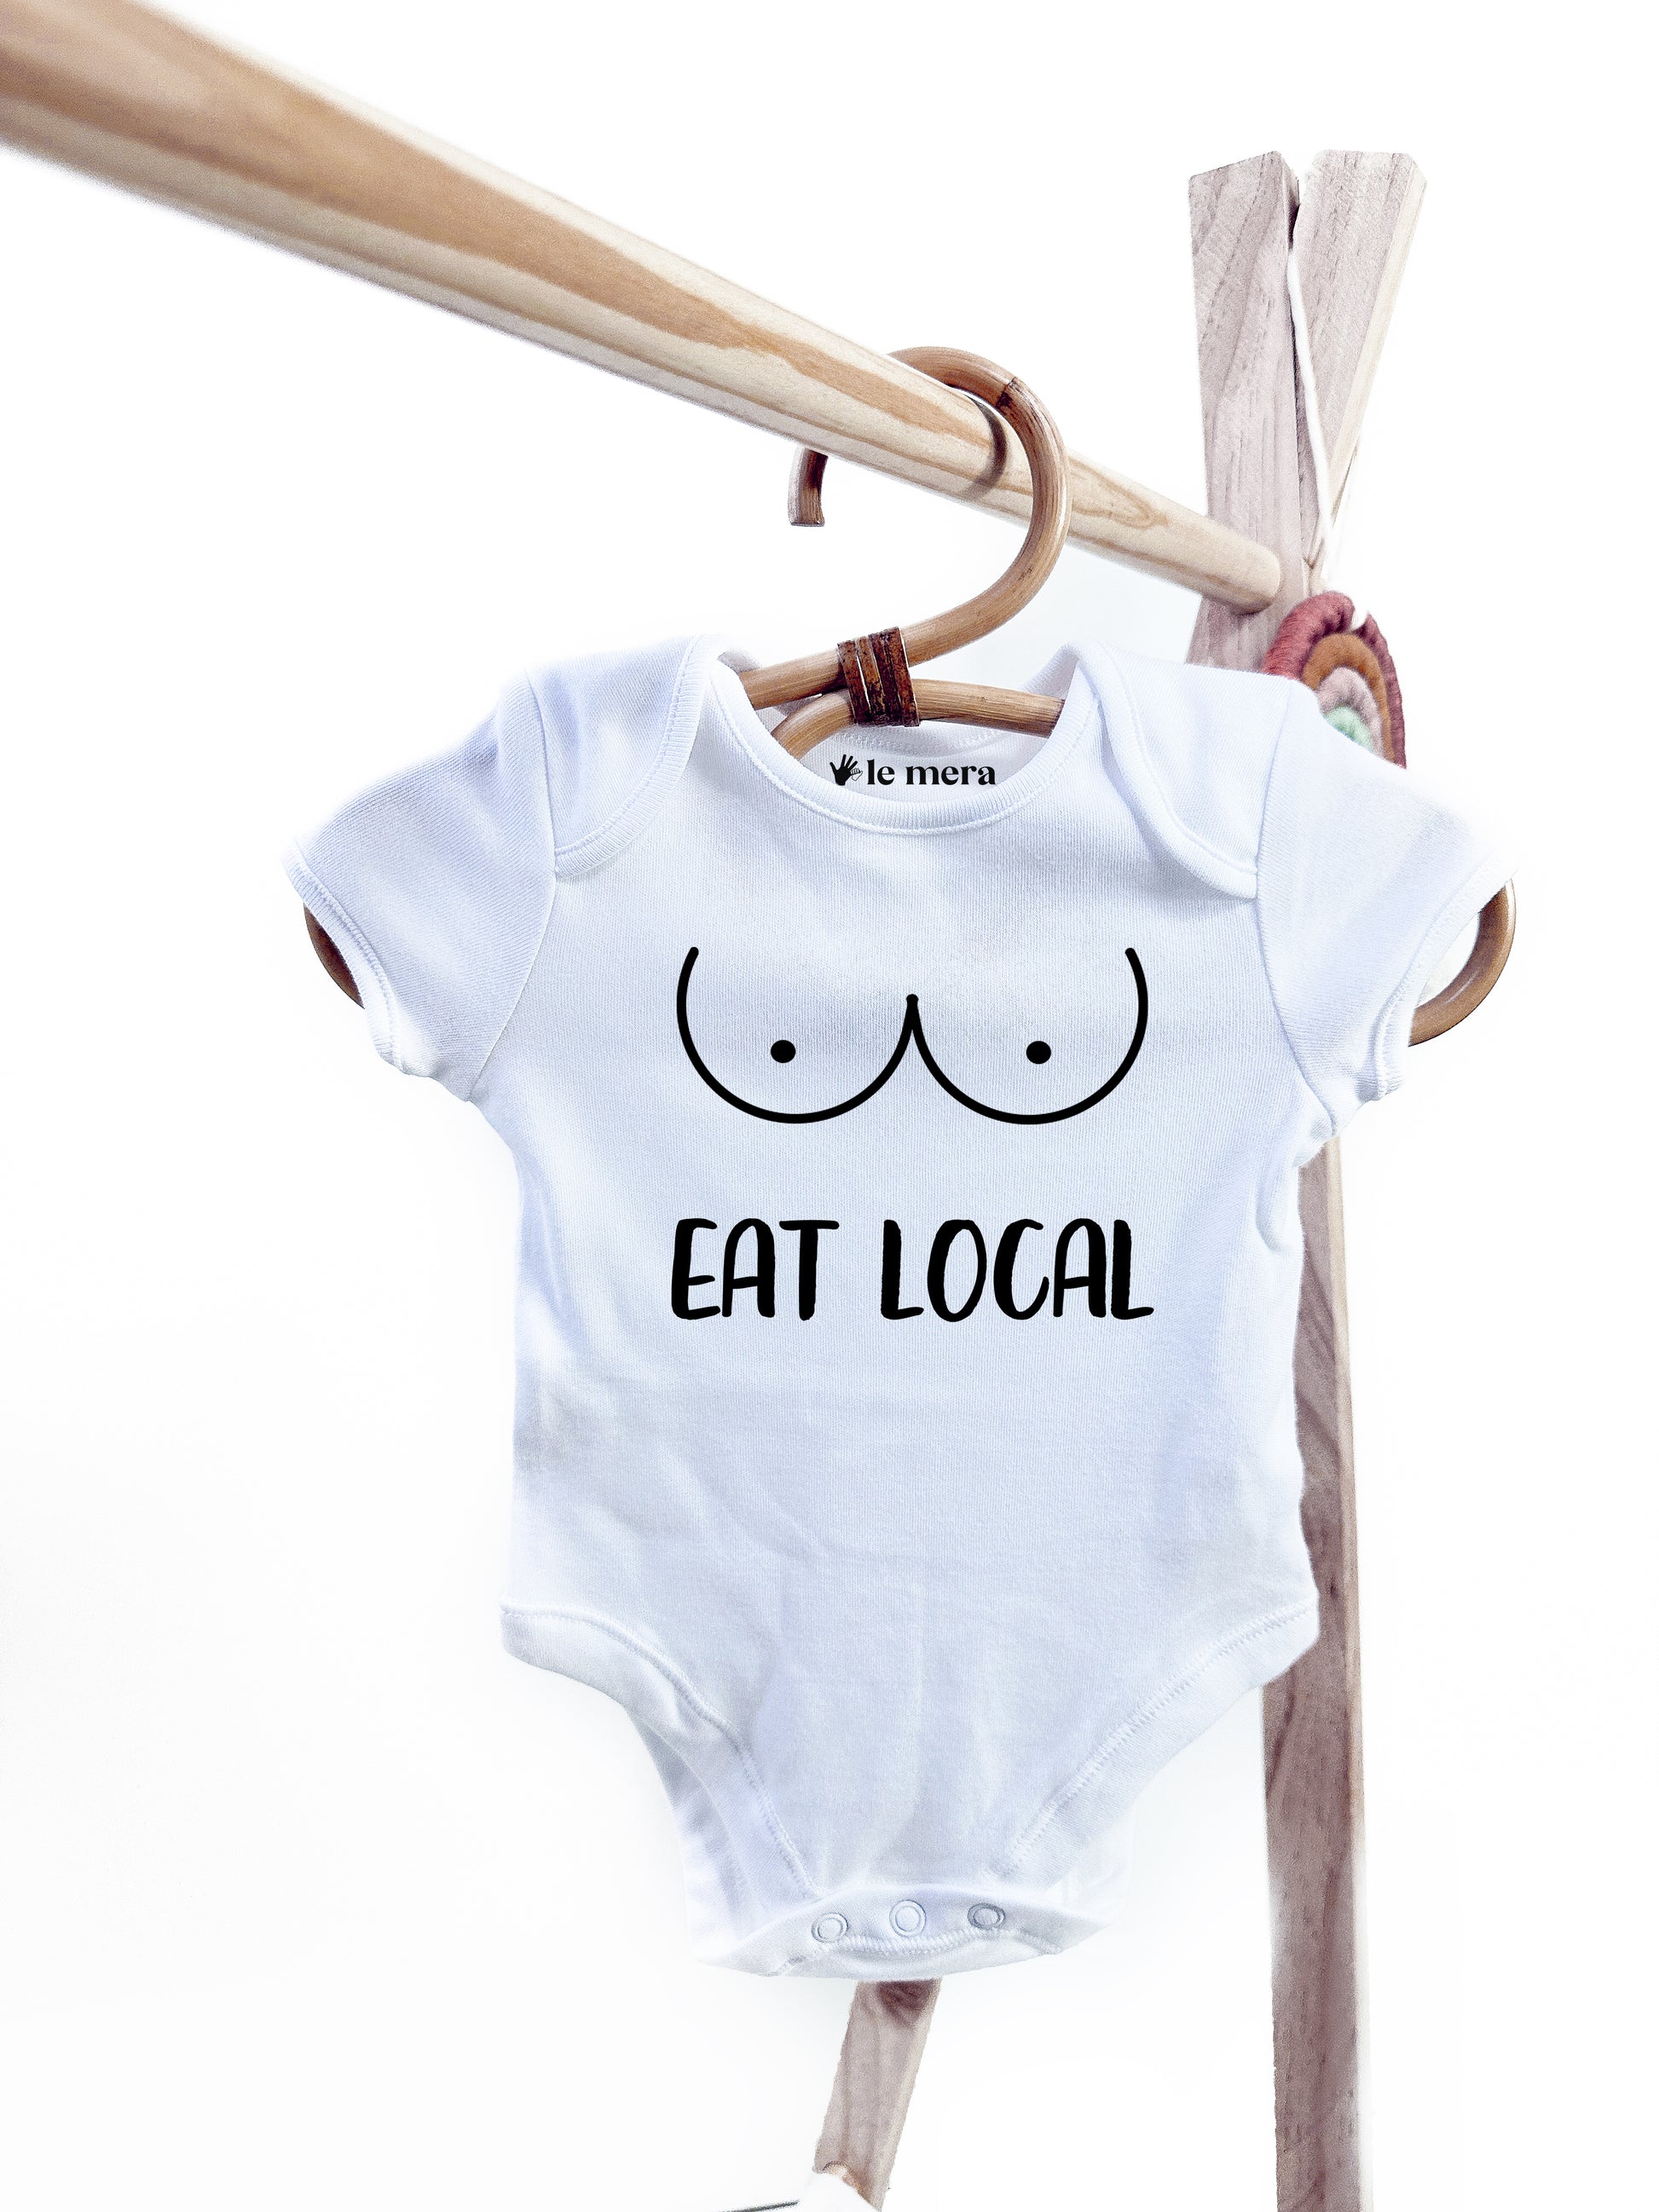 Eat Local Breastfeeding Bodysuit or Tee